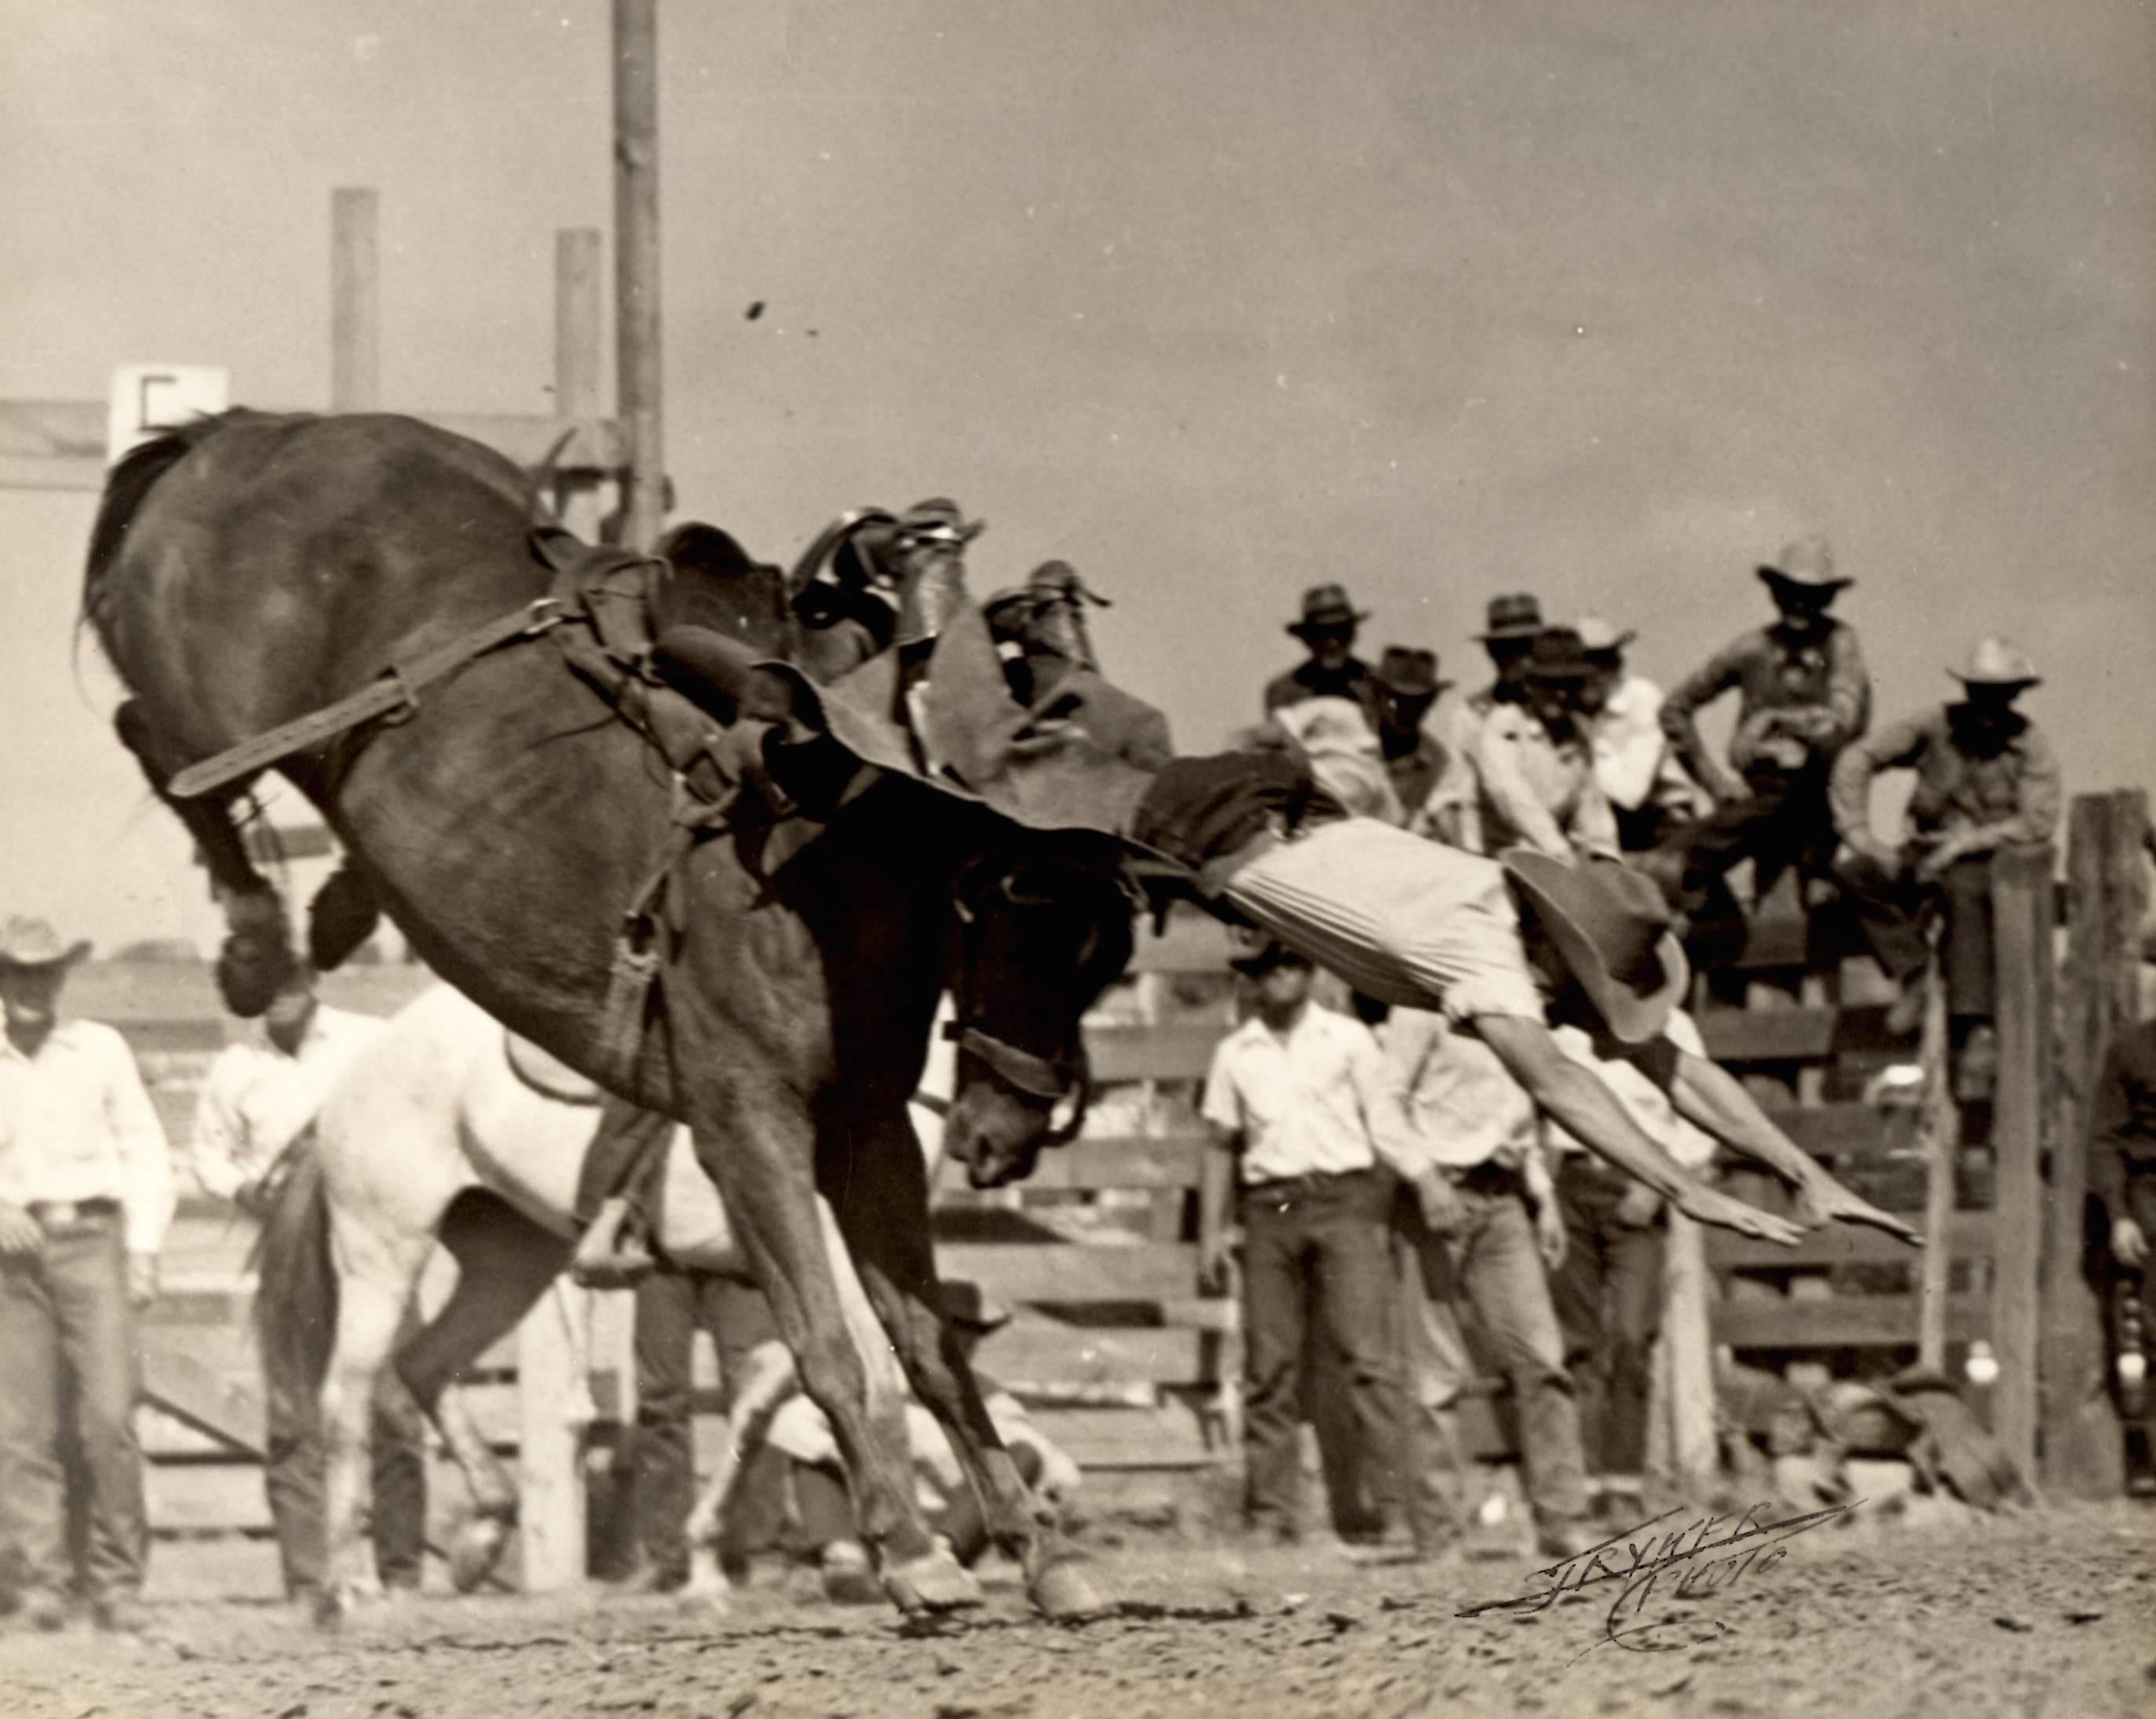 John Stryker Portrait Photograph - Wart Boaman divin' fer land on Montana Red & Easy Pickens, Bull Riding